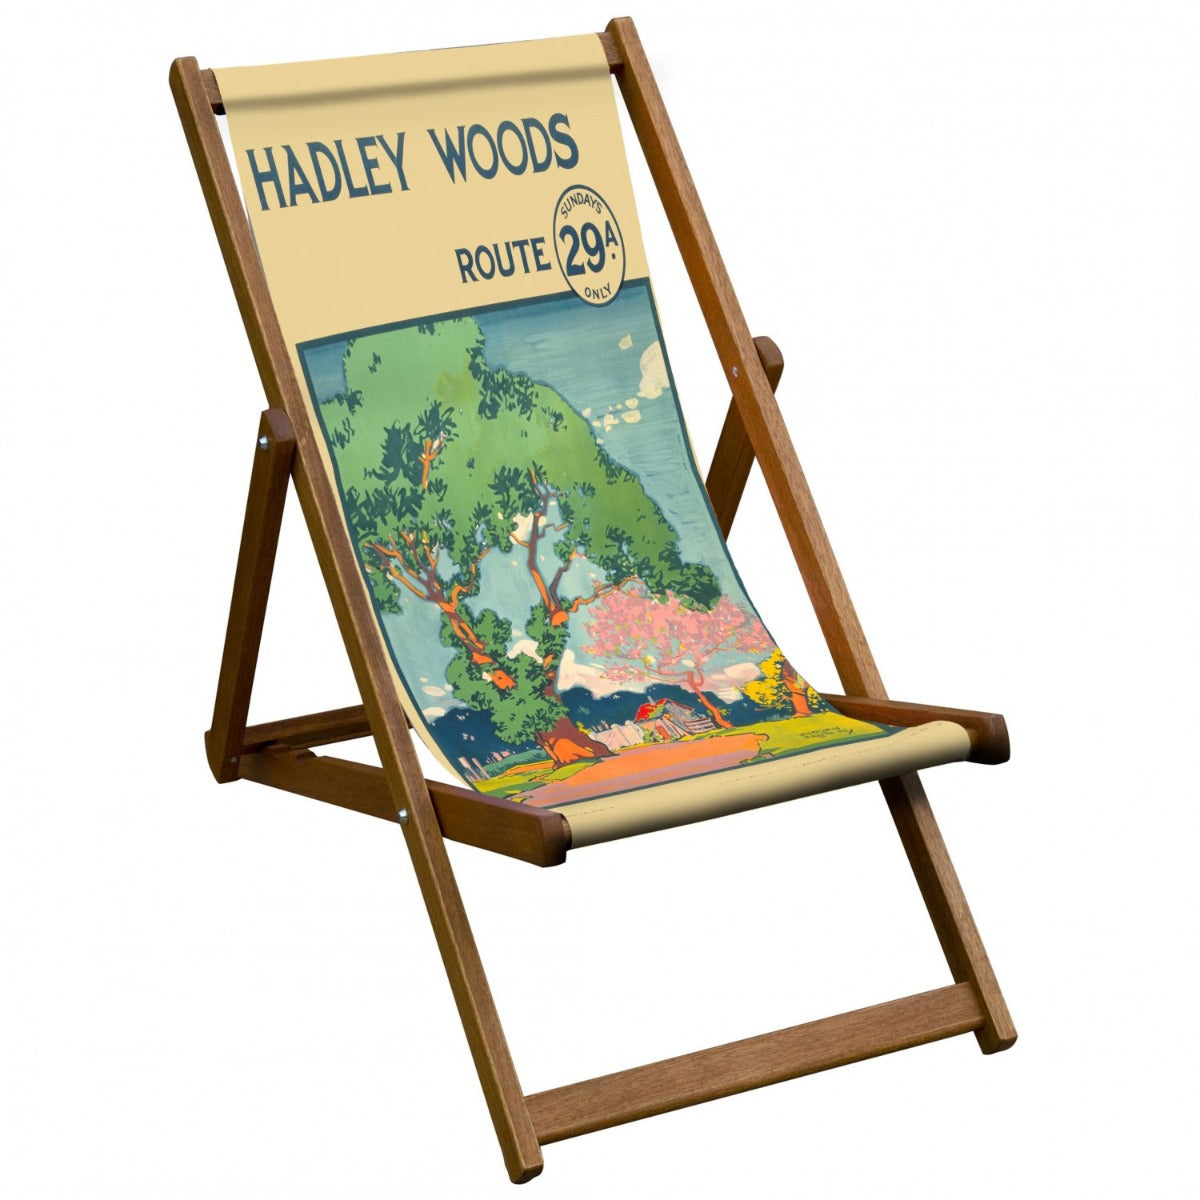 Vintage Inspired Wooden Deckchair- Hadley Woods - London Transport Poster